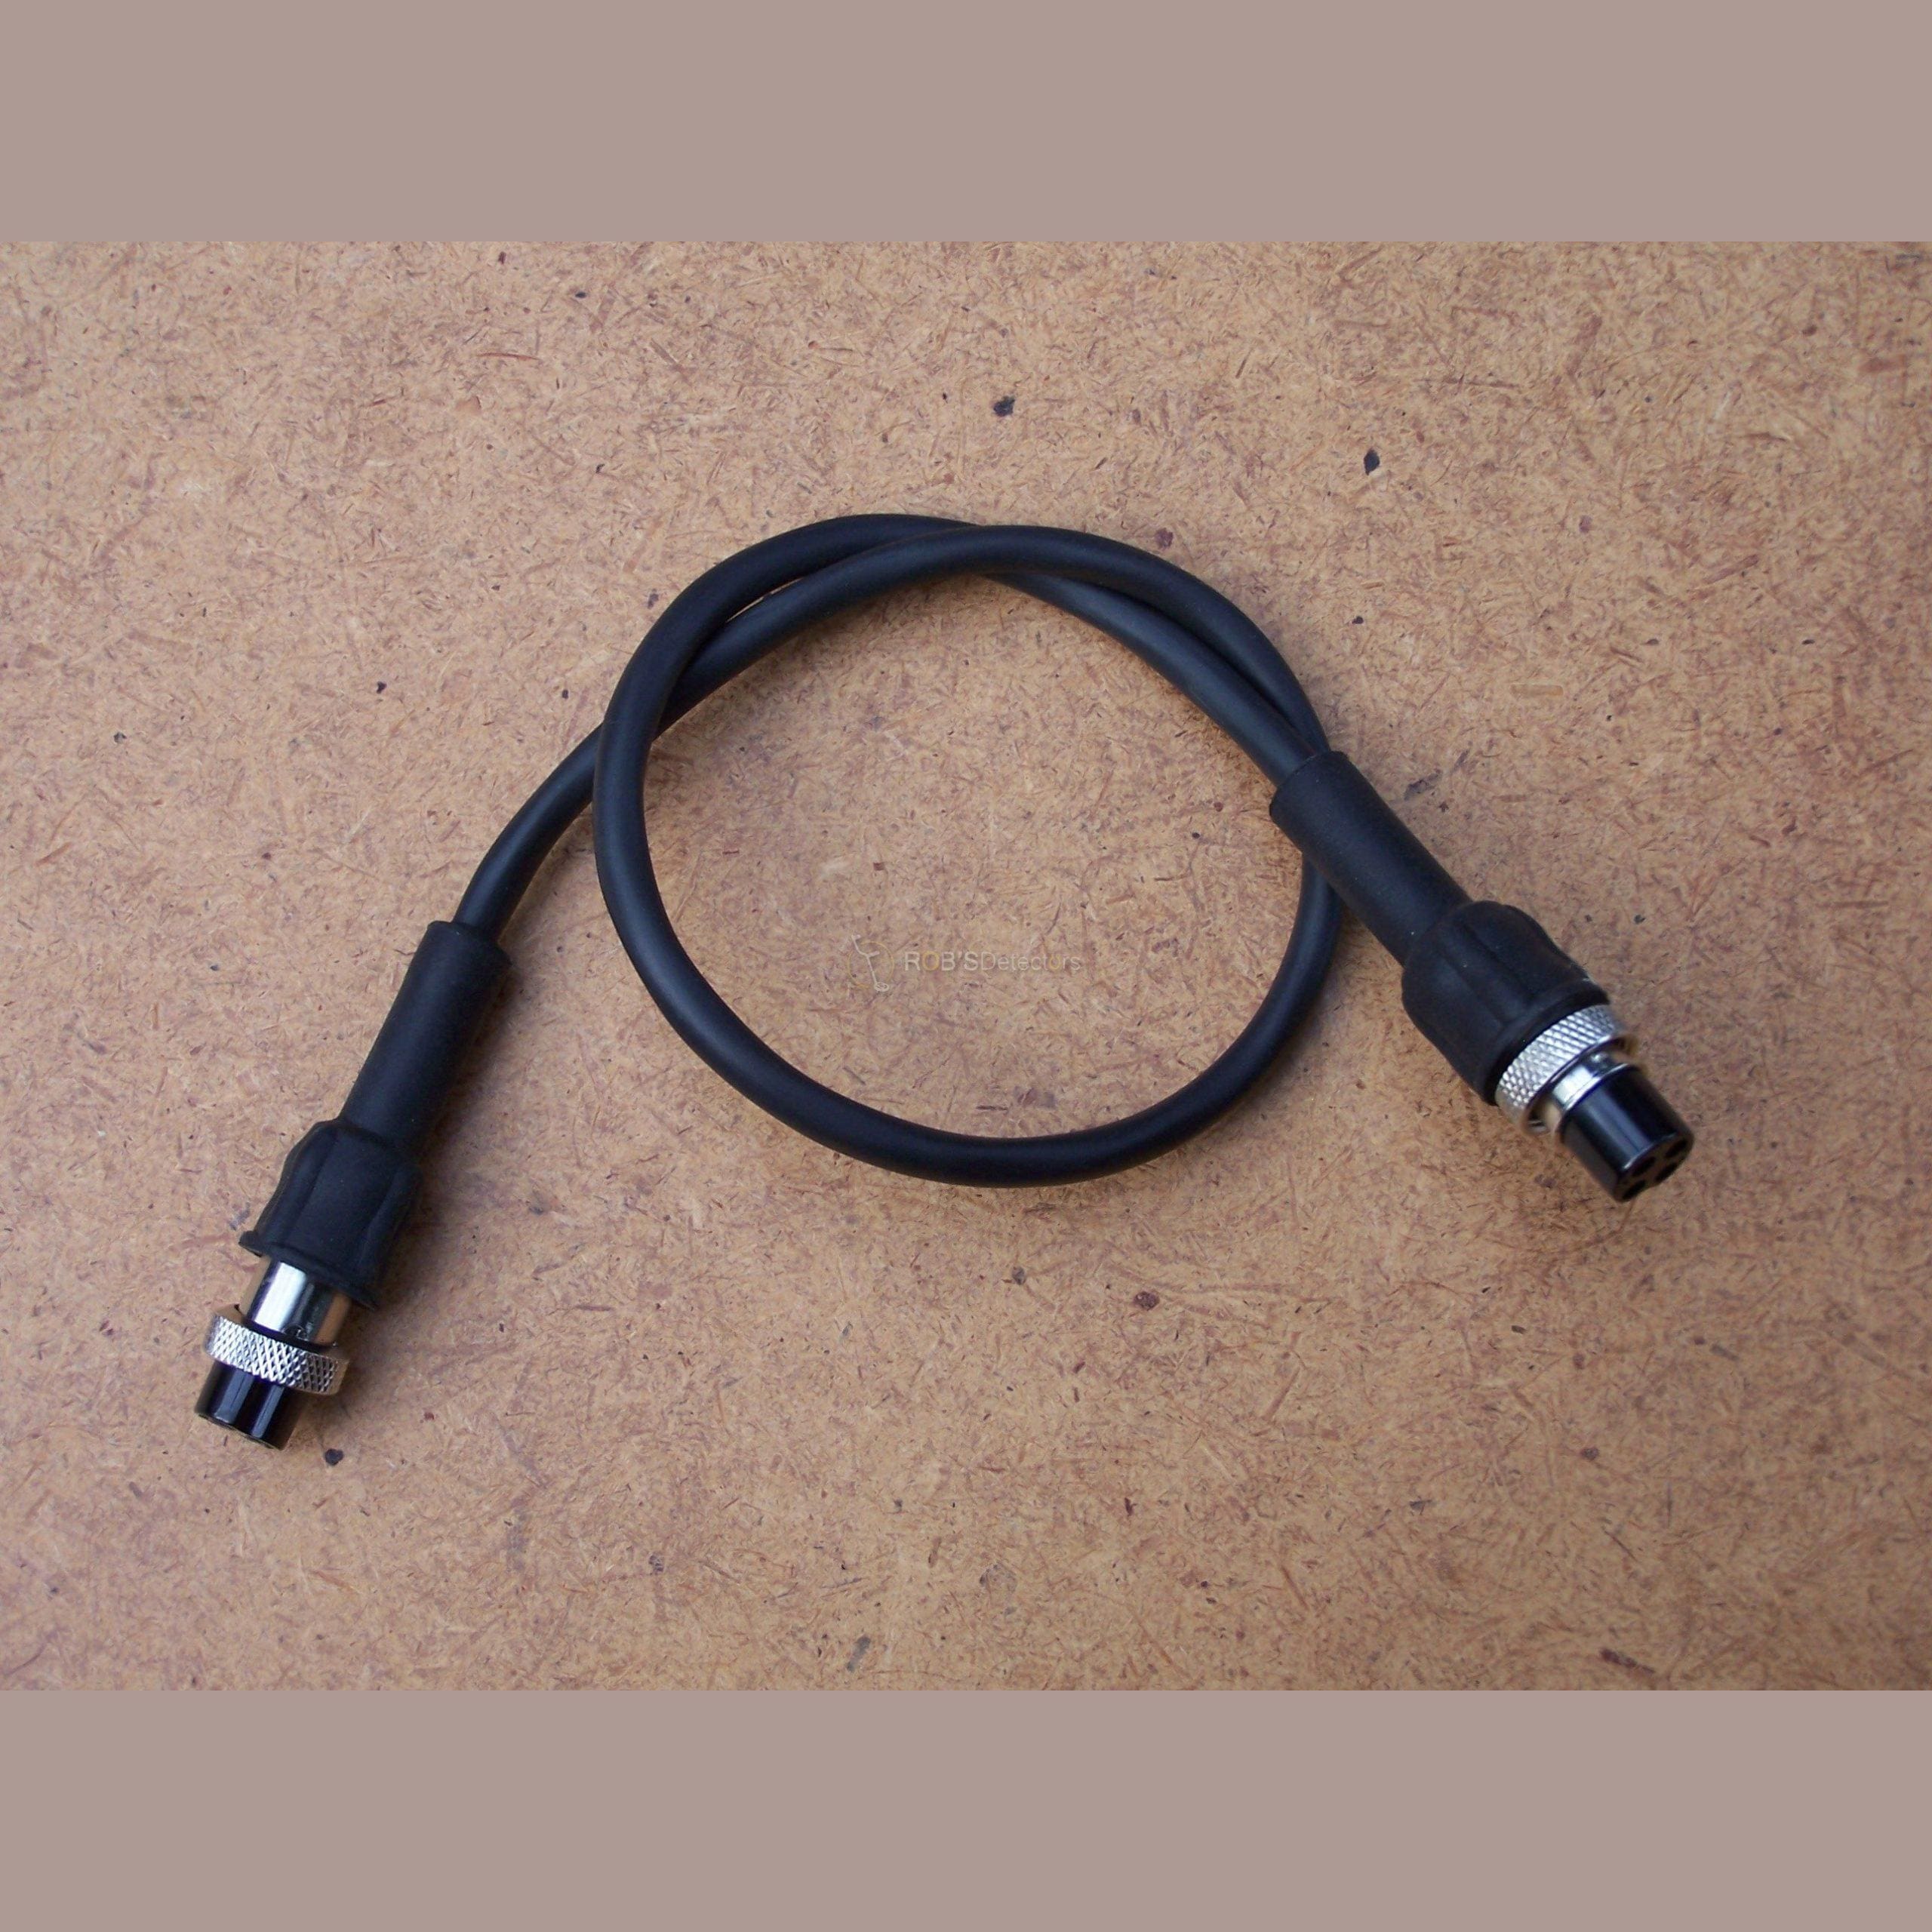 Miner John 20″ Short Power Cord for Minelab SD/GP – 4 pin